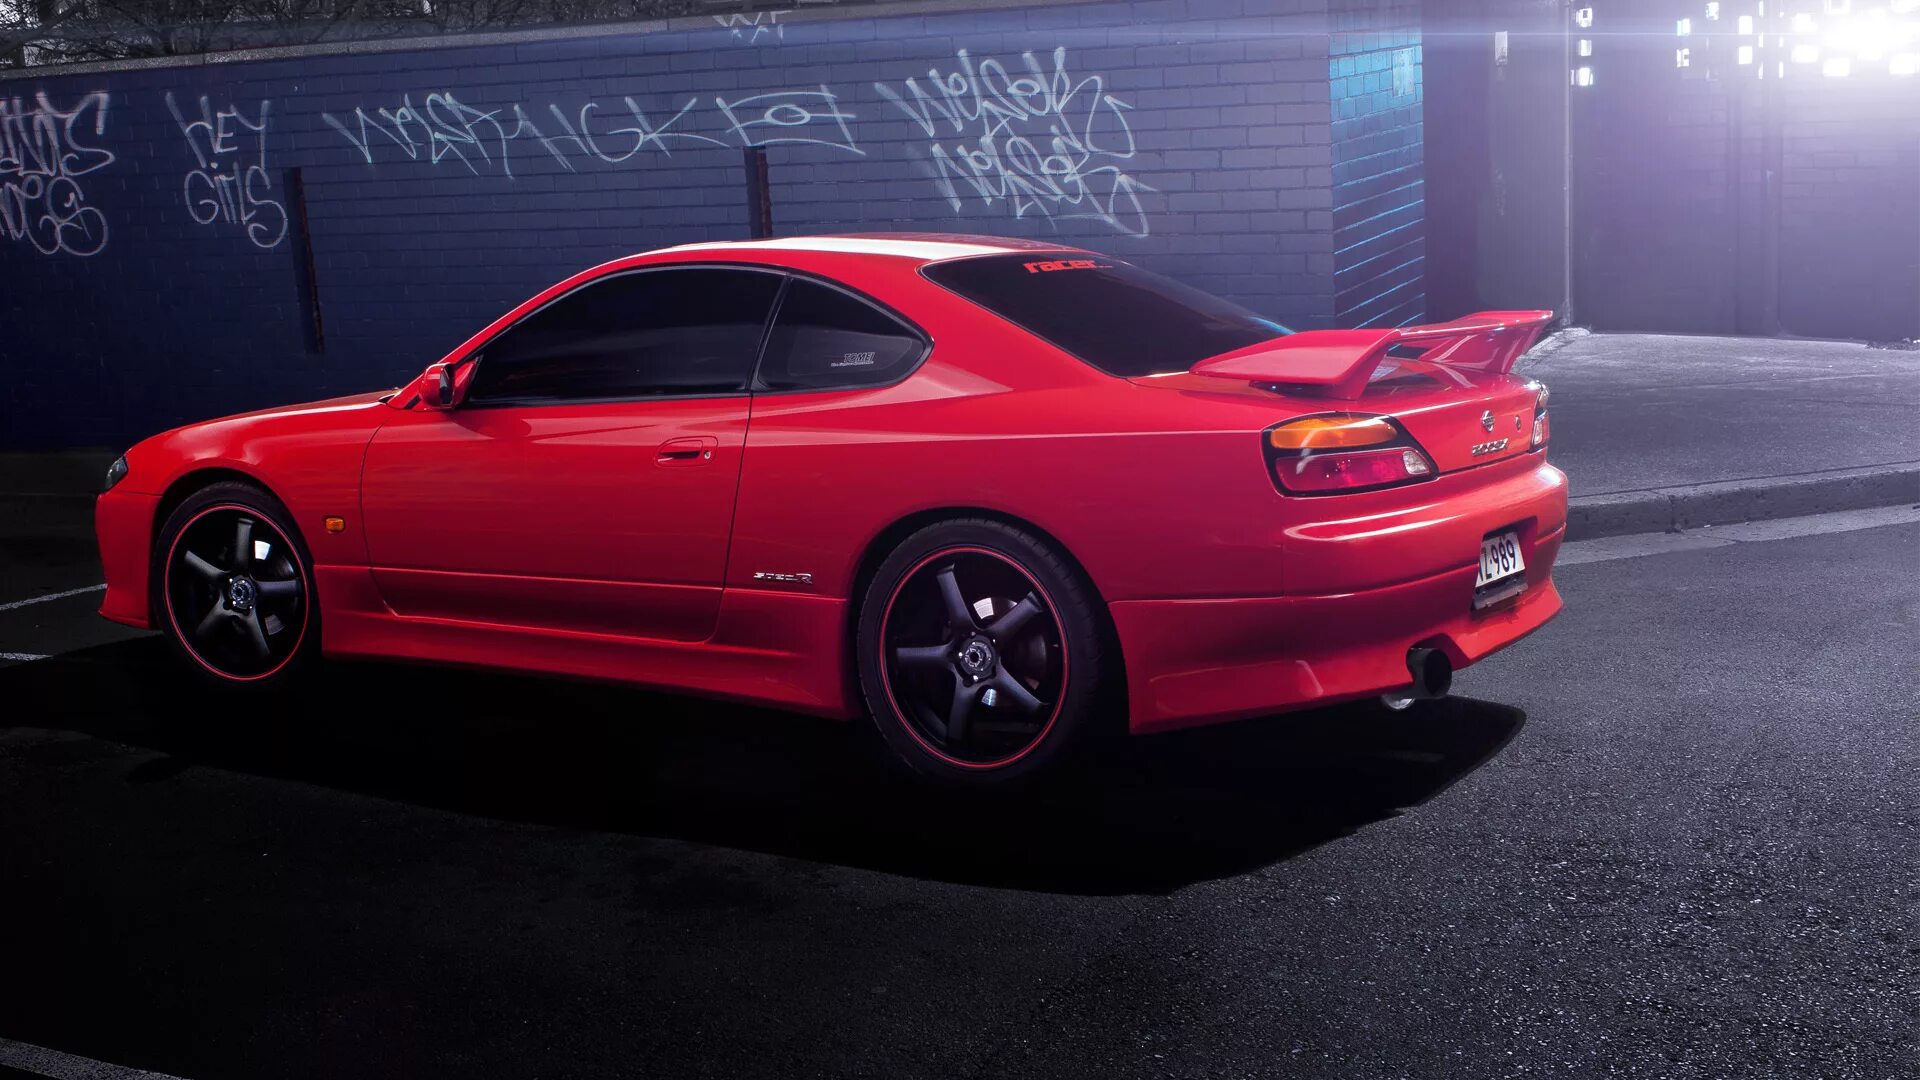 Nissan Silvia s15 Red. Nissan Silvia s15 красная. Nissan Silvia s15 Black. Nissan Silvia s15 1920x1080. Пепы сильвии